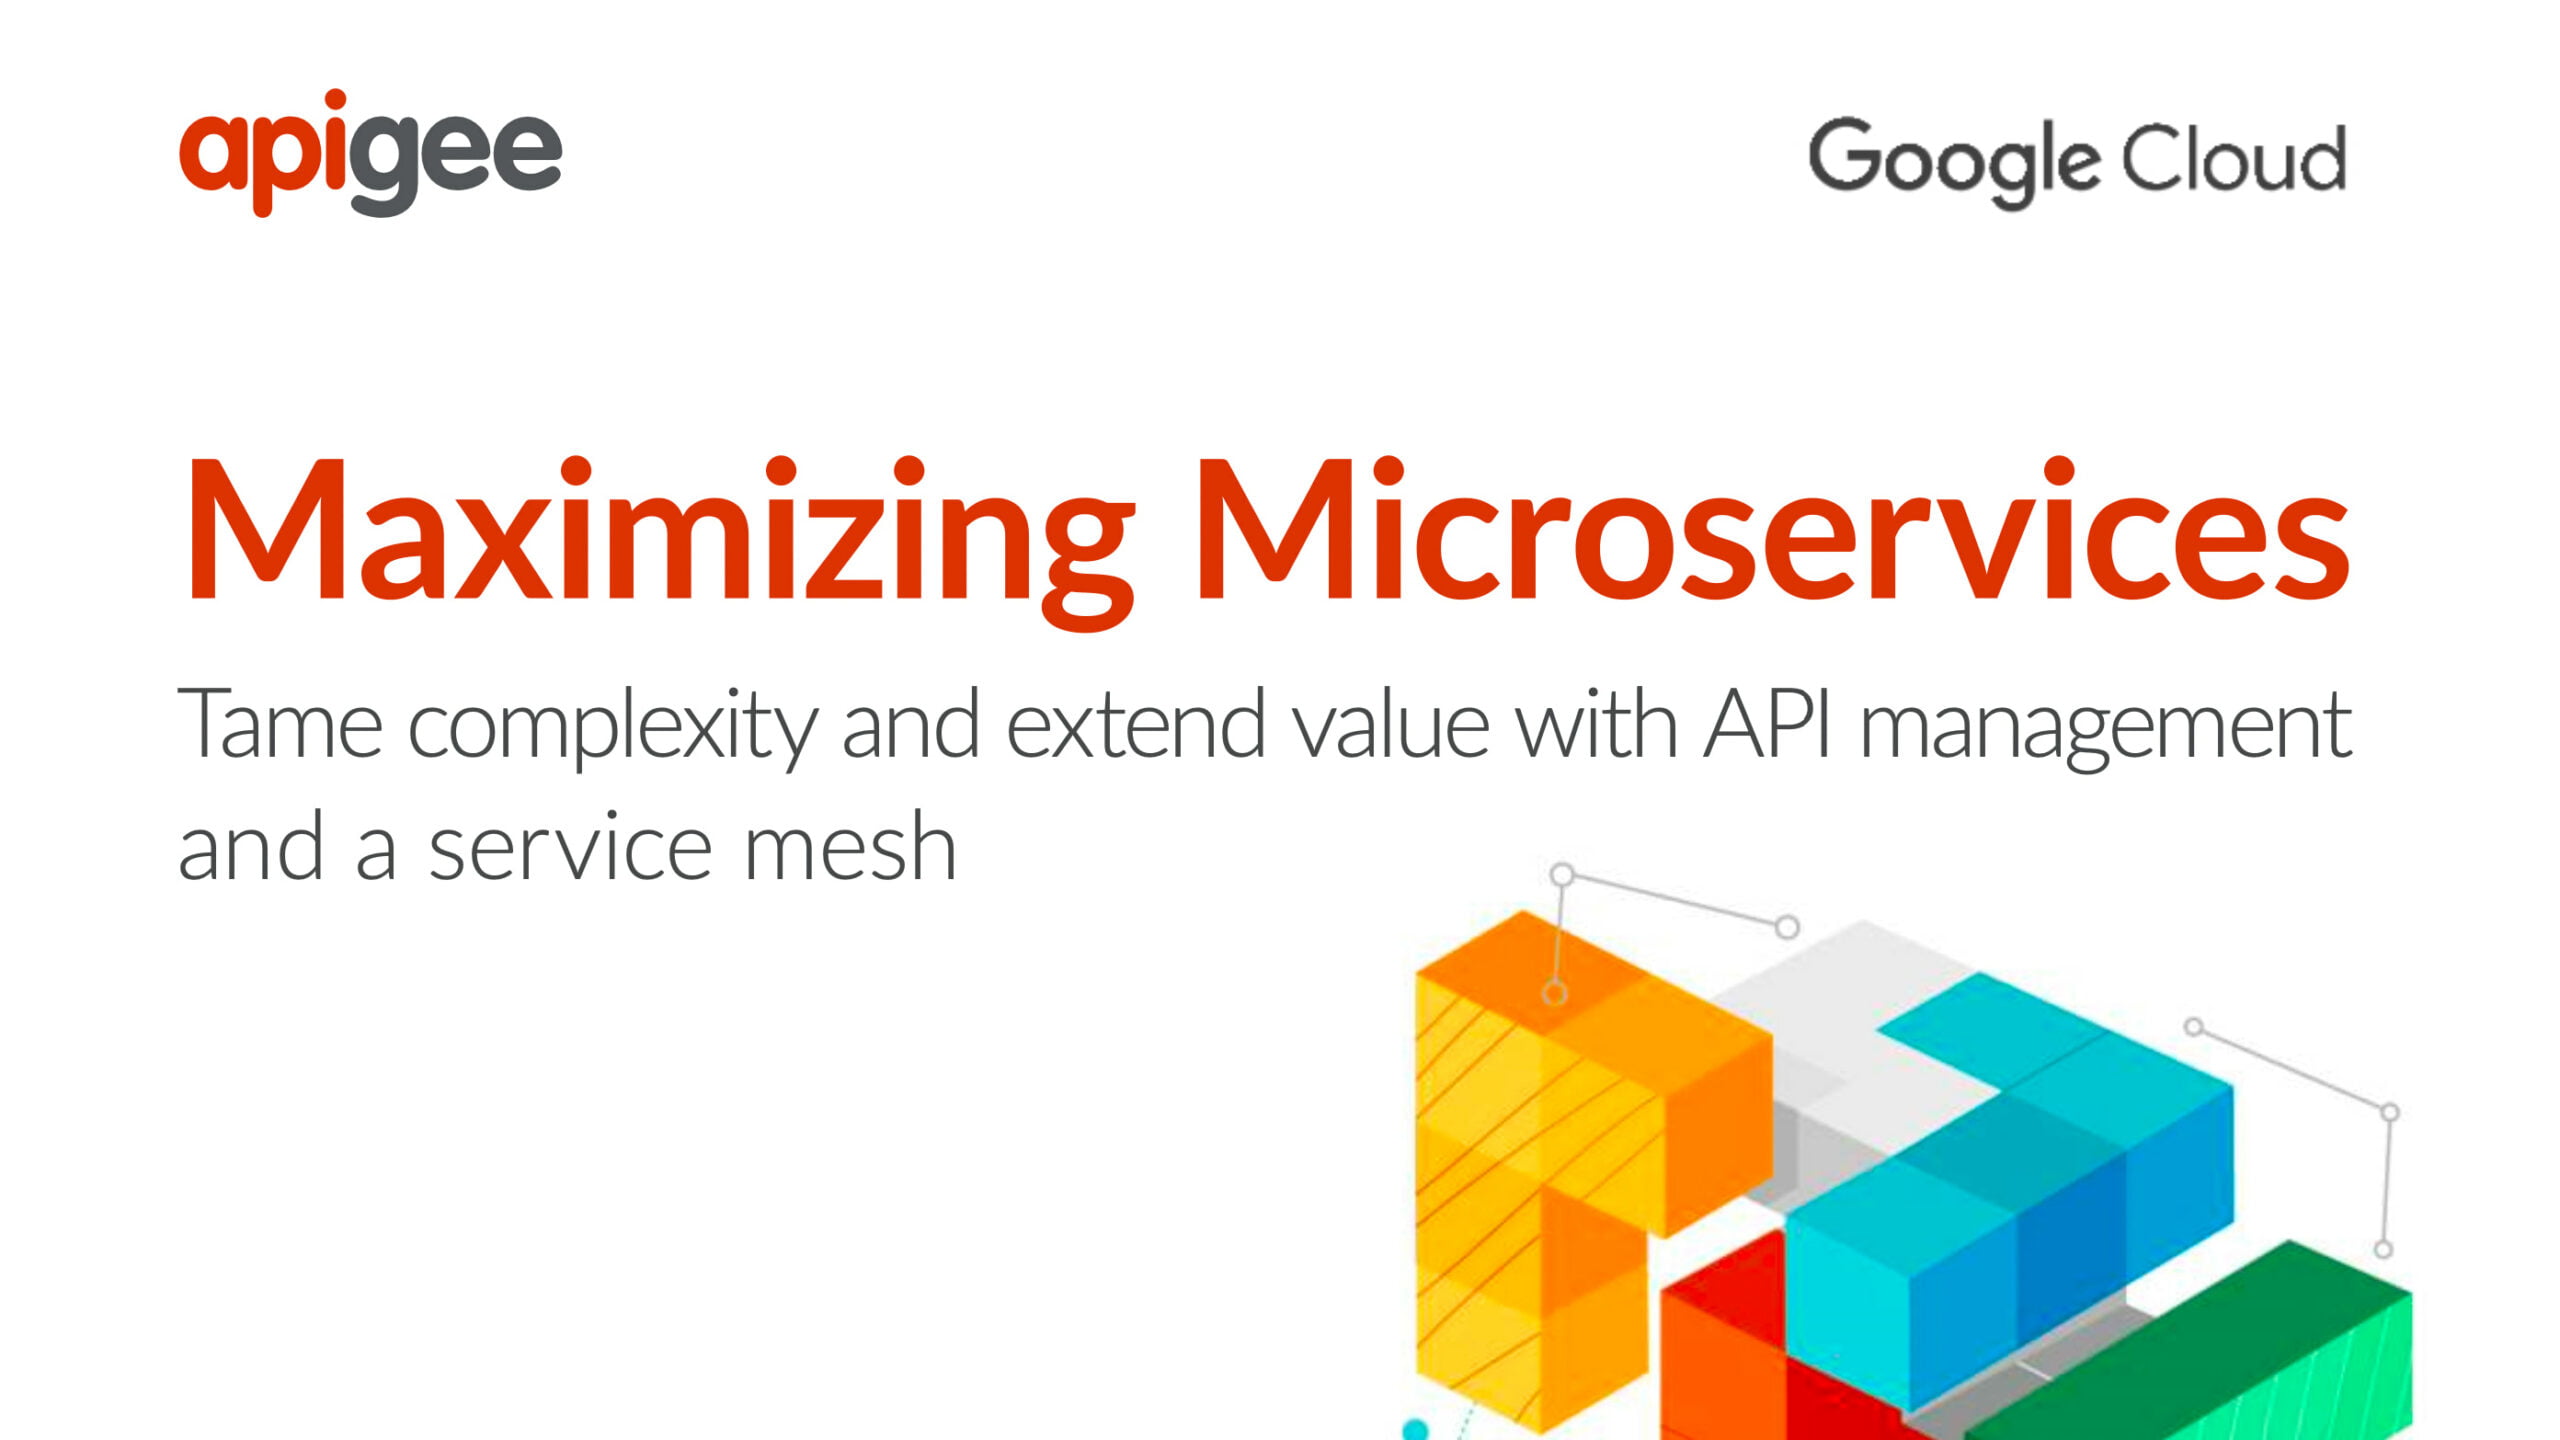 3. Maximizing Microservices